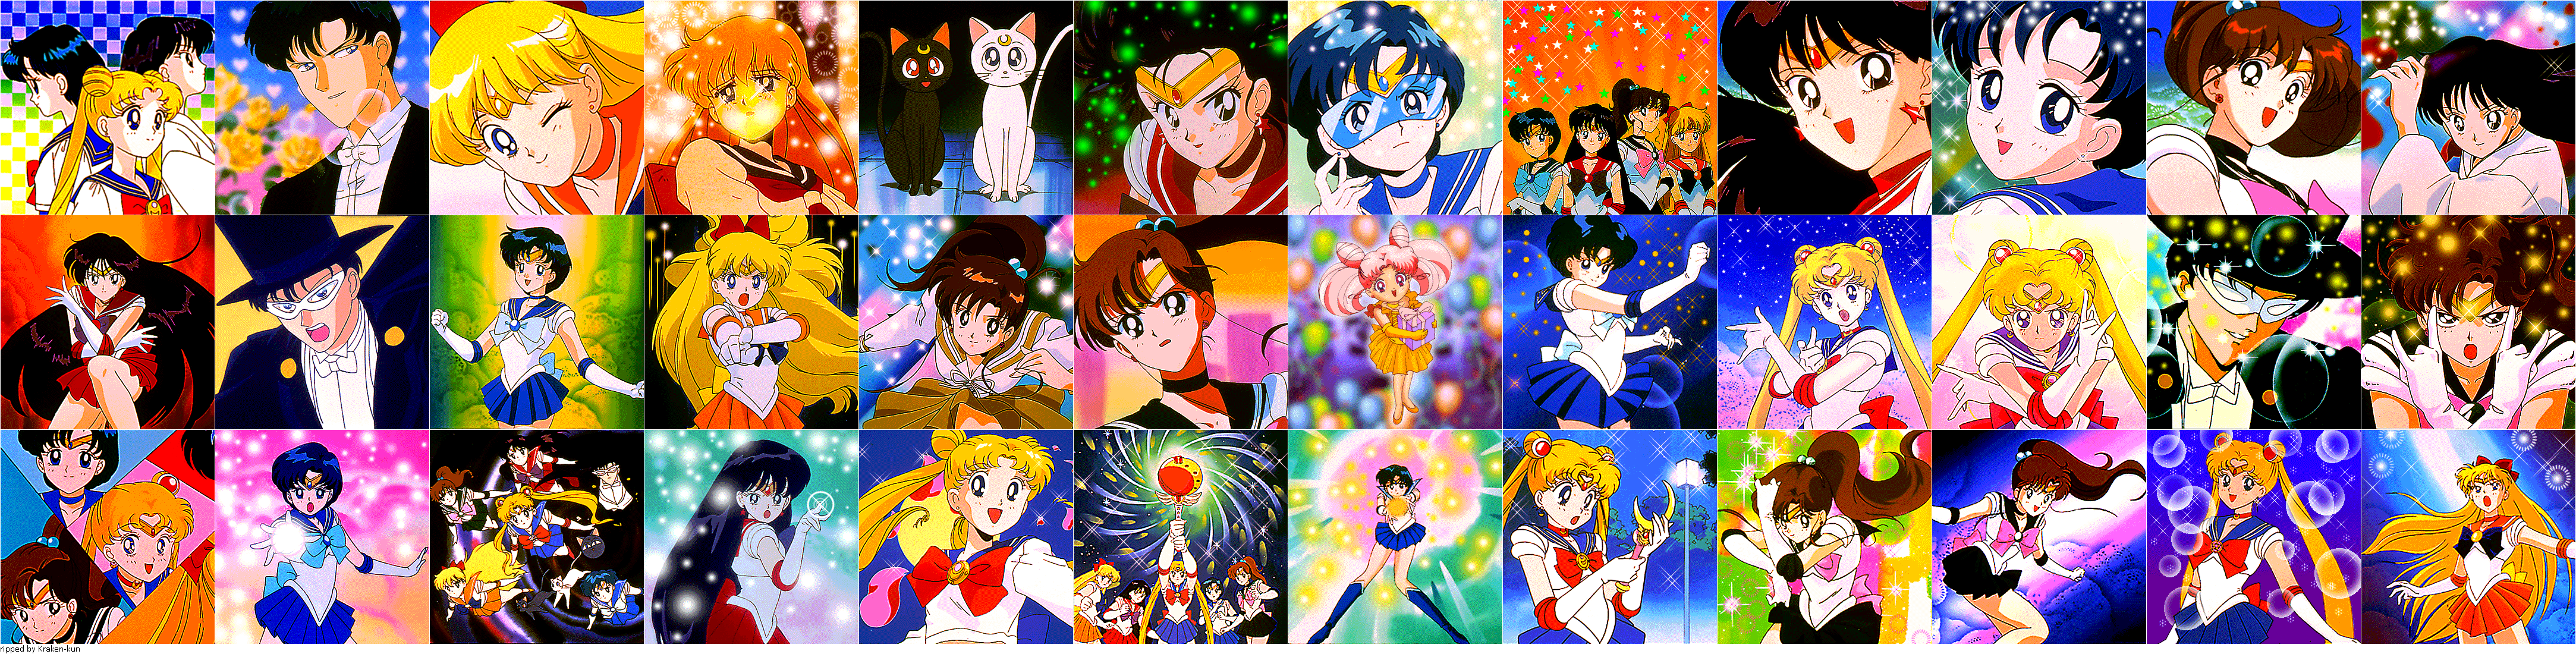 3D Adventures of Sailor Moon - Puzzle Images